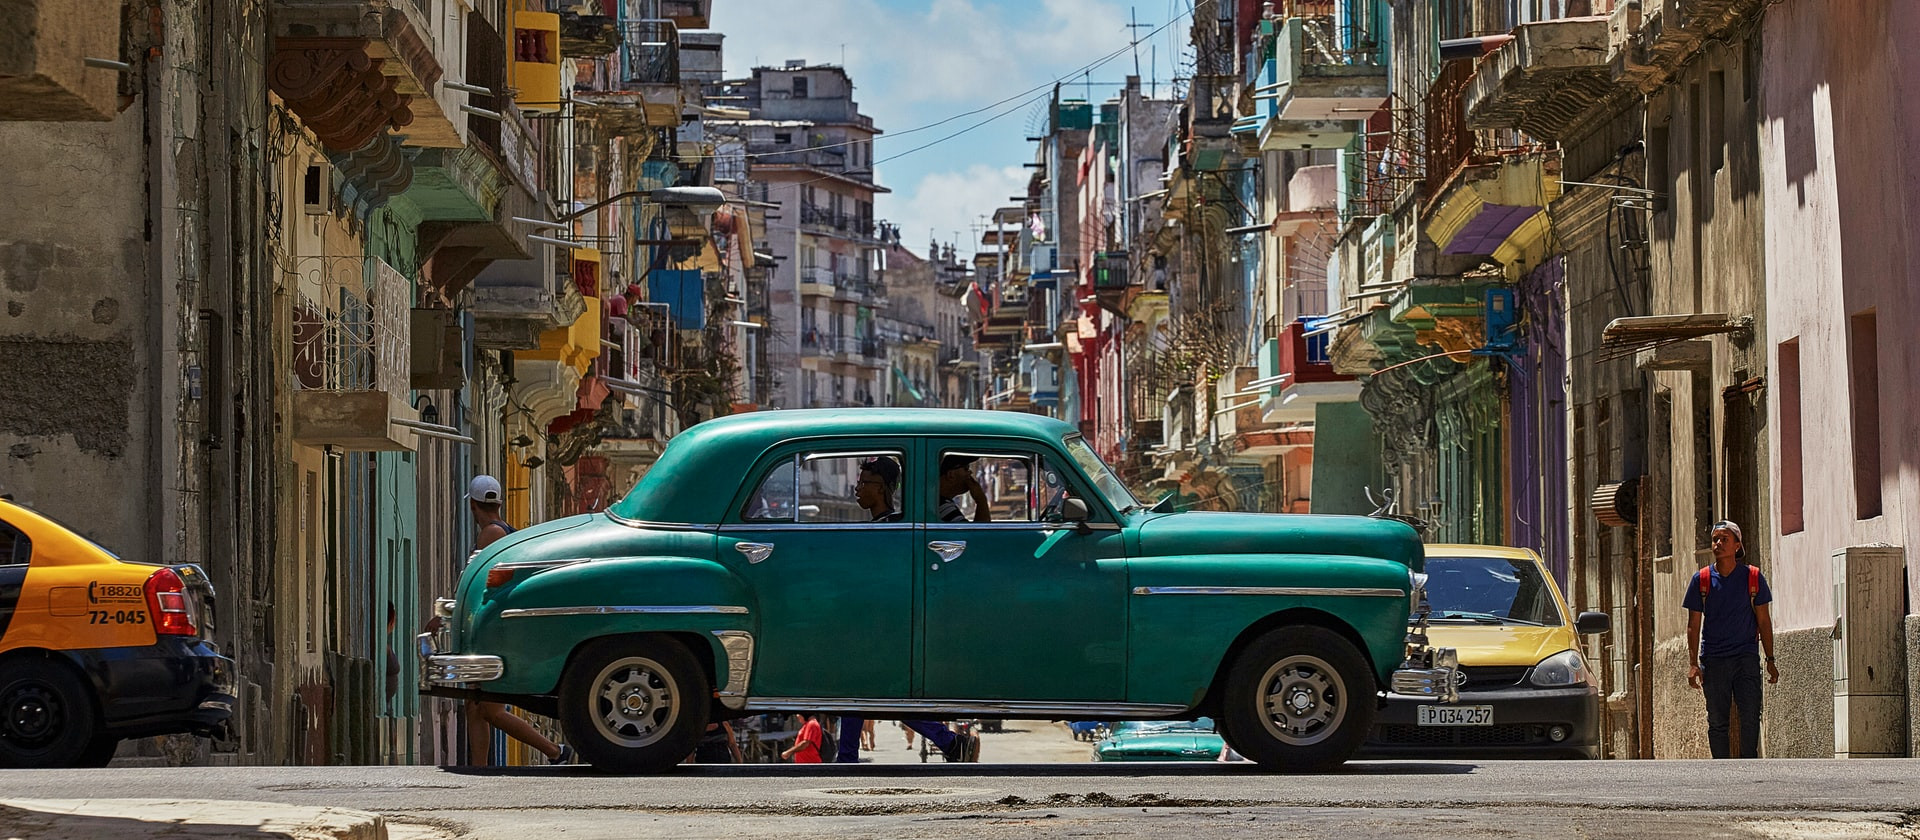 Vintage car driving along a street in Cuba